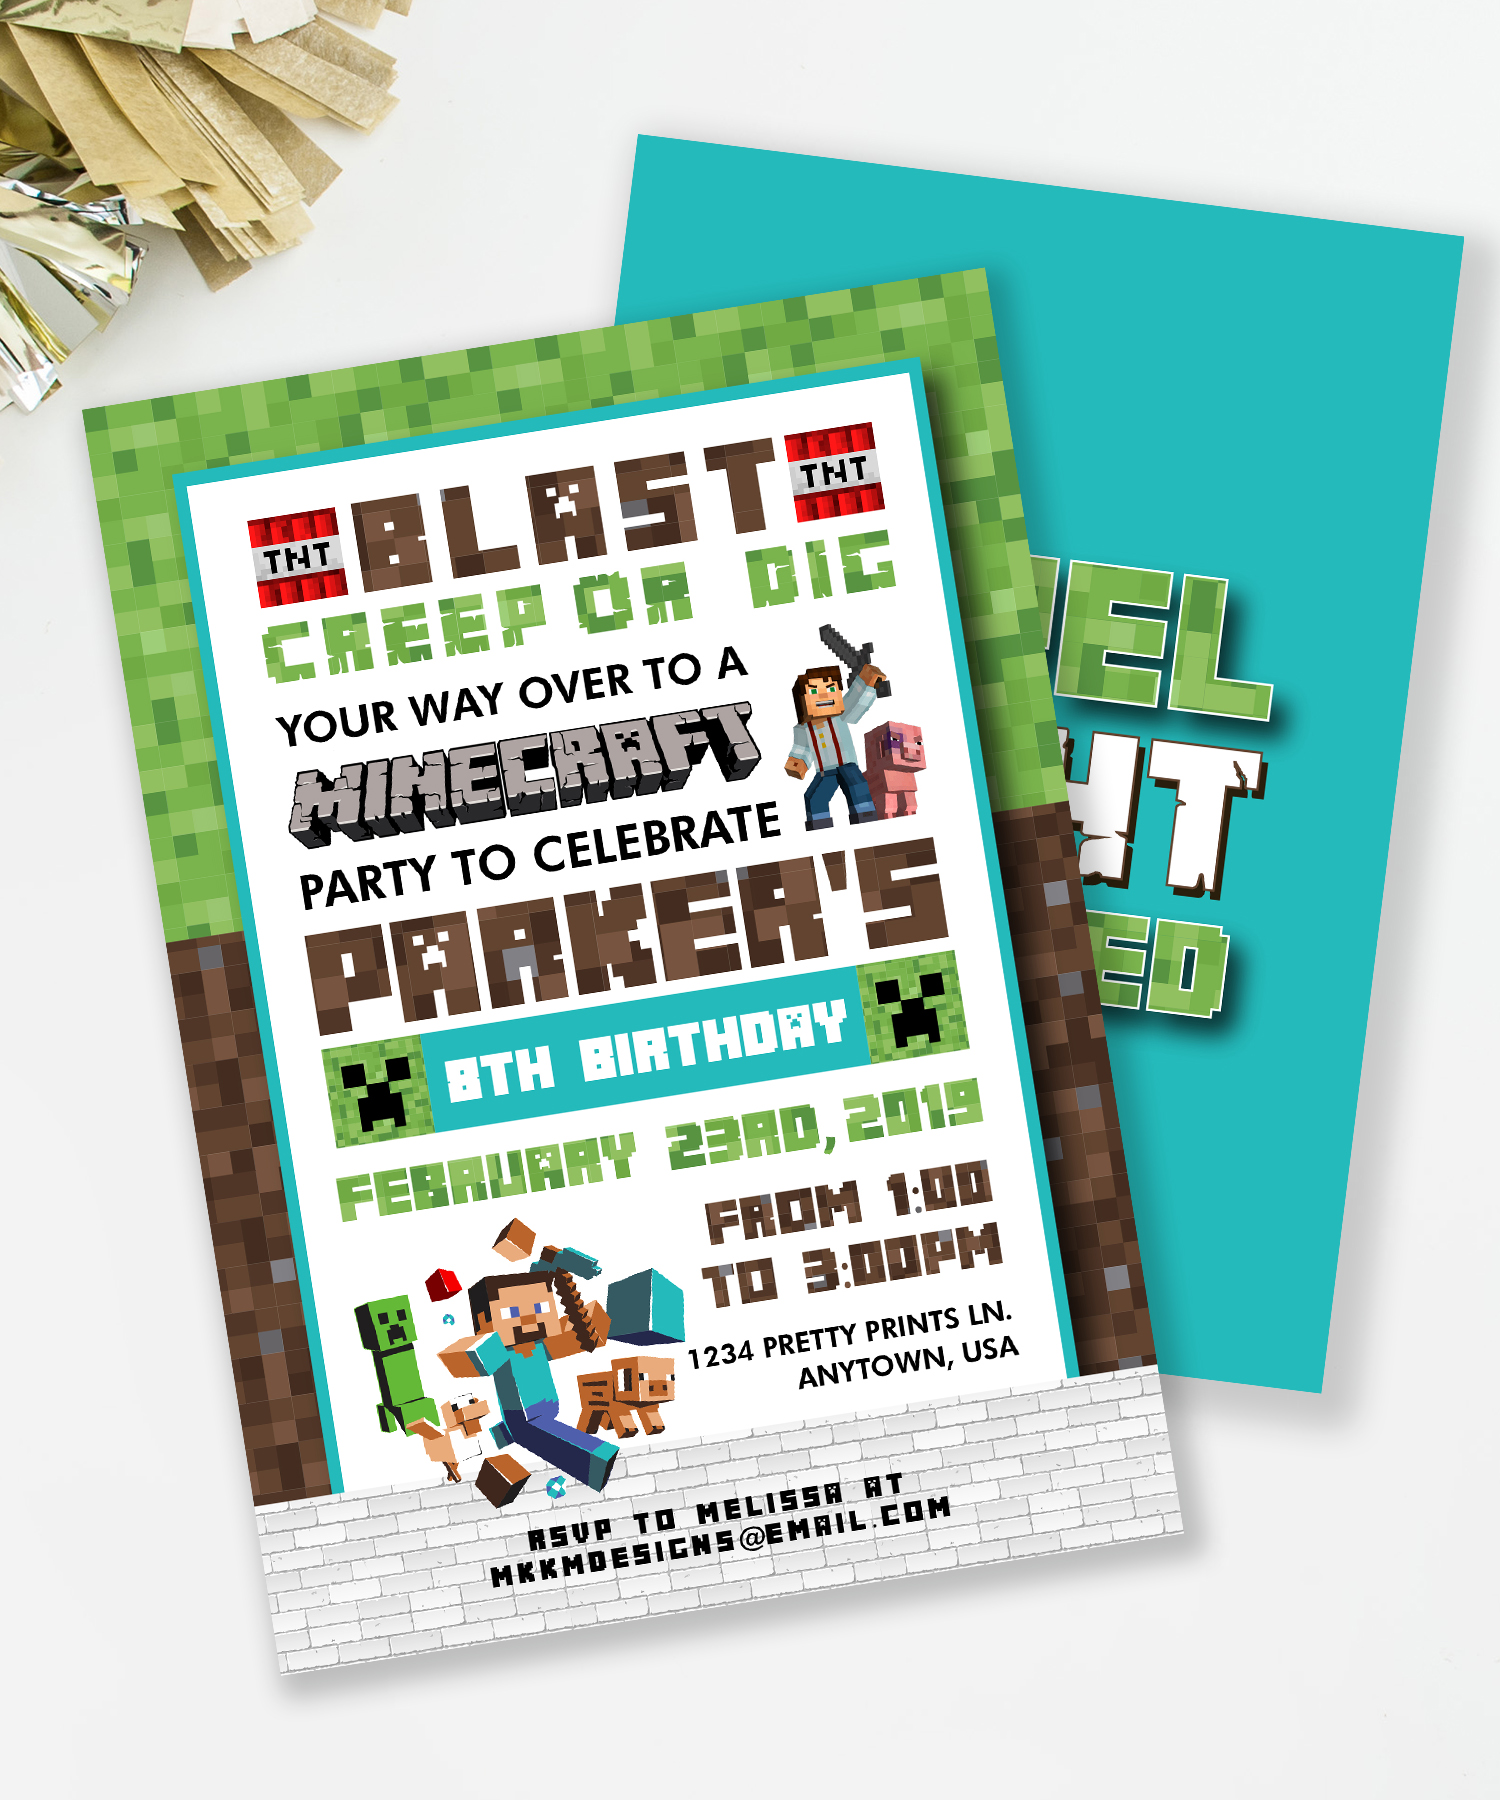 Customizable Minecraft Invitation: Editable Invite For Your Party